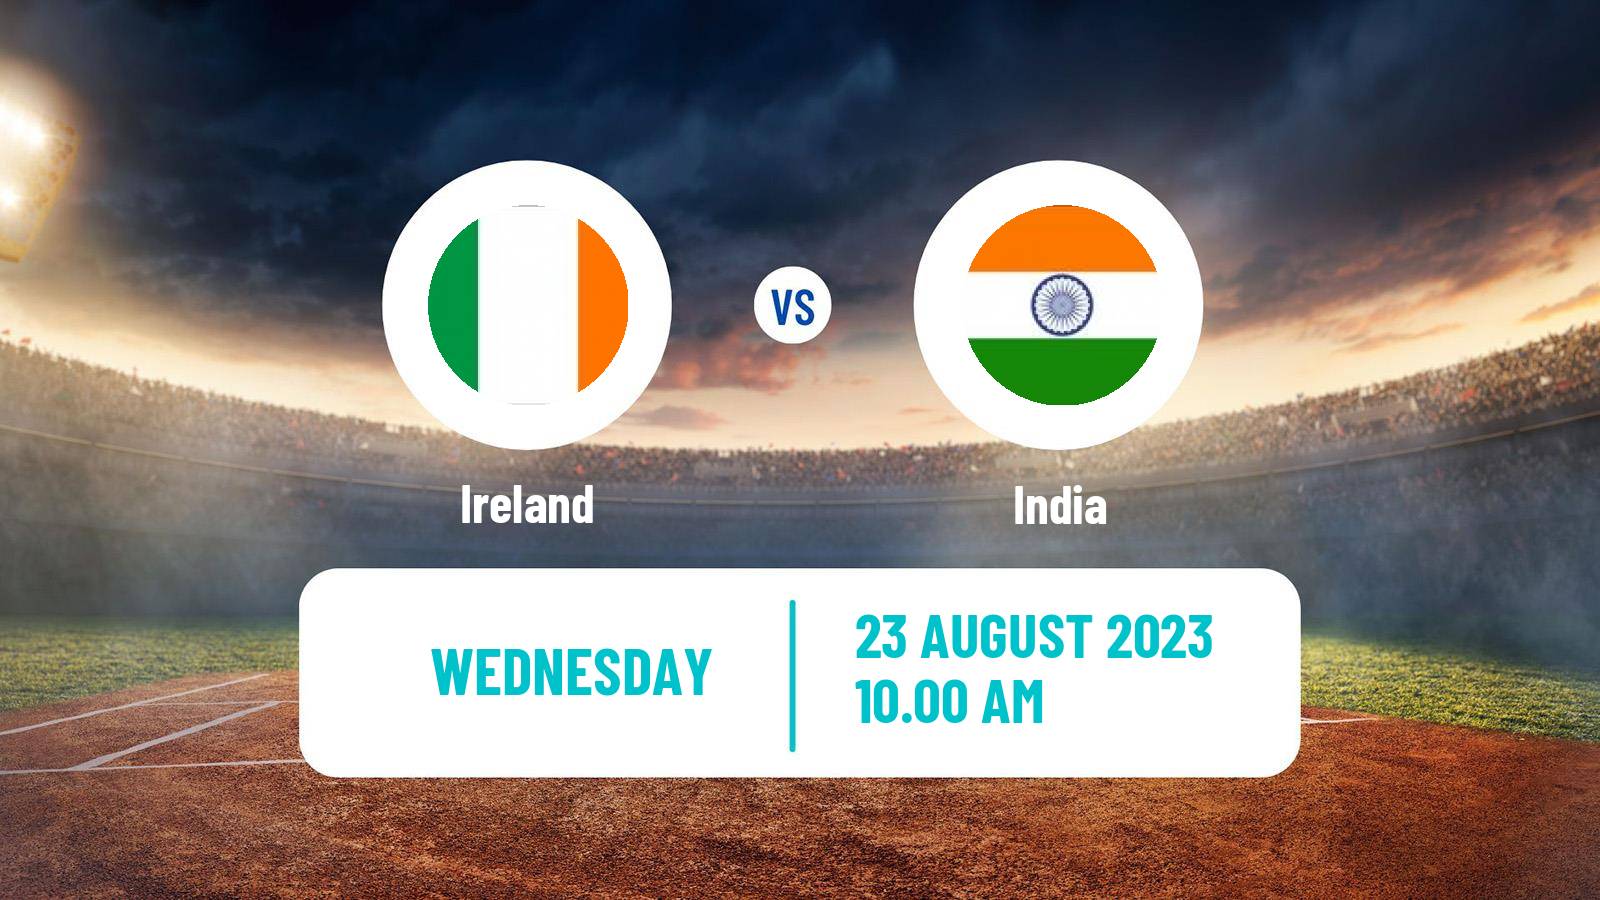 Cricket Twenty20 International Ireland - India